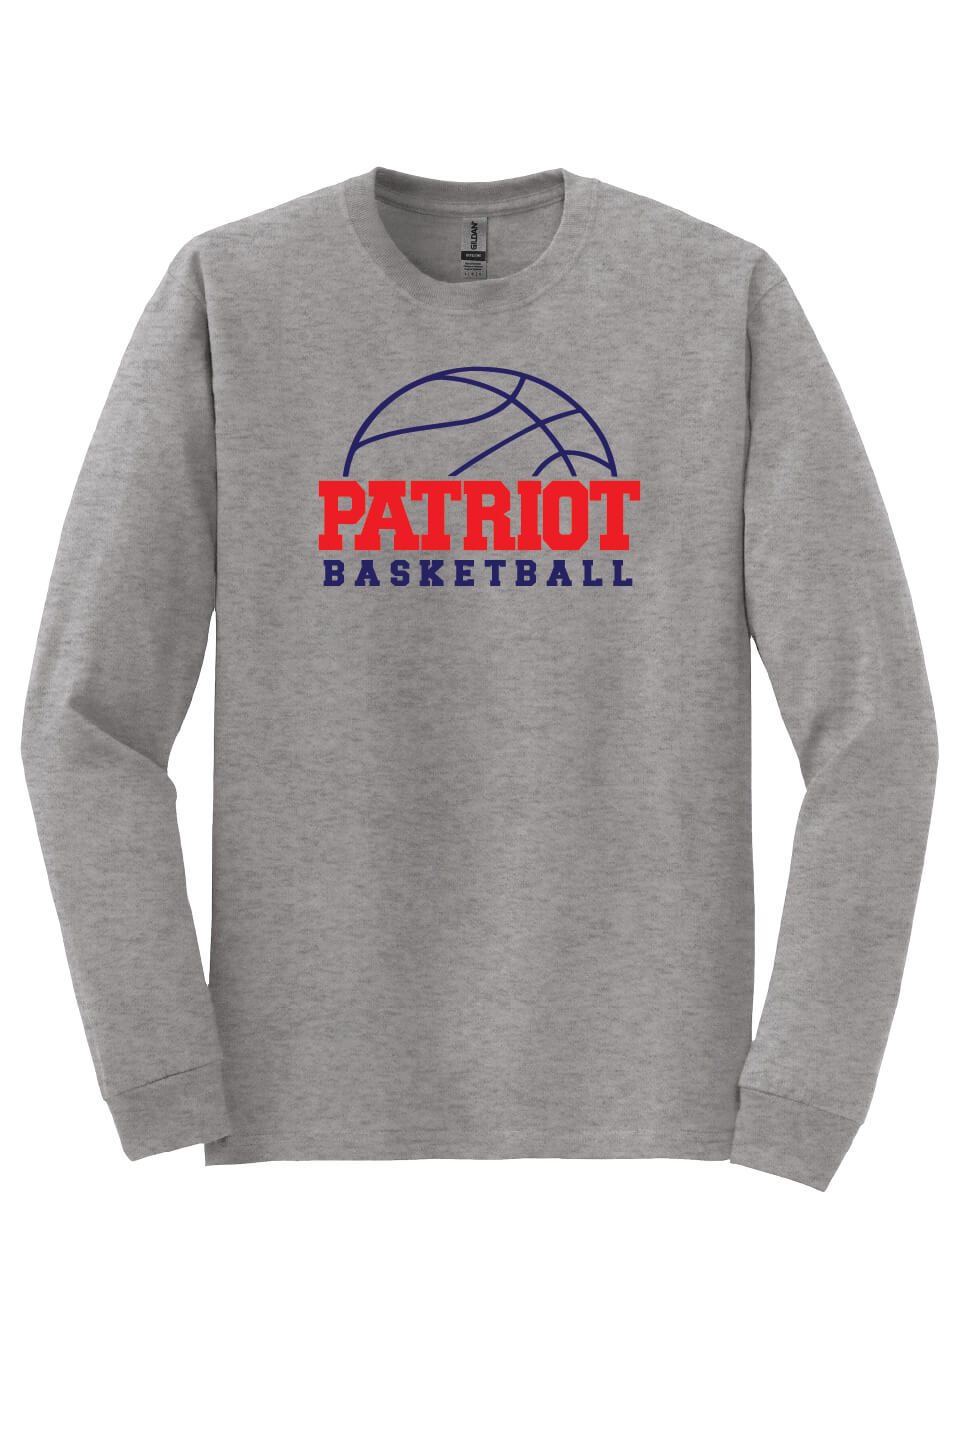 Patriots Basketball Long Sleeve T-Shirt (Youth) gray